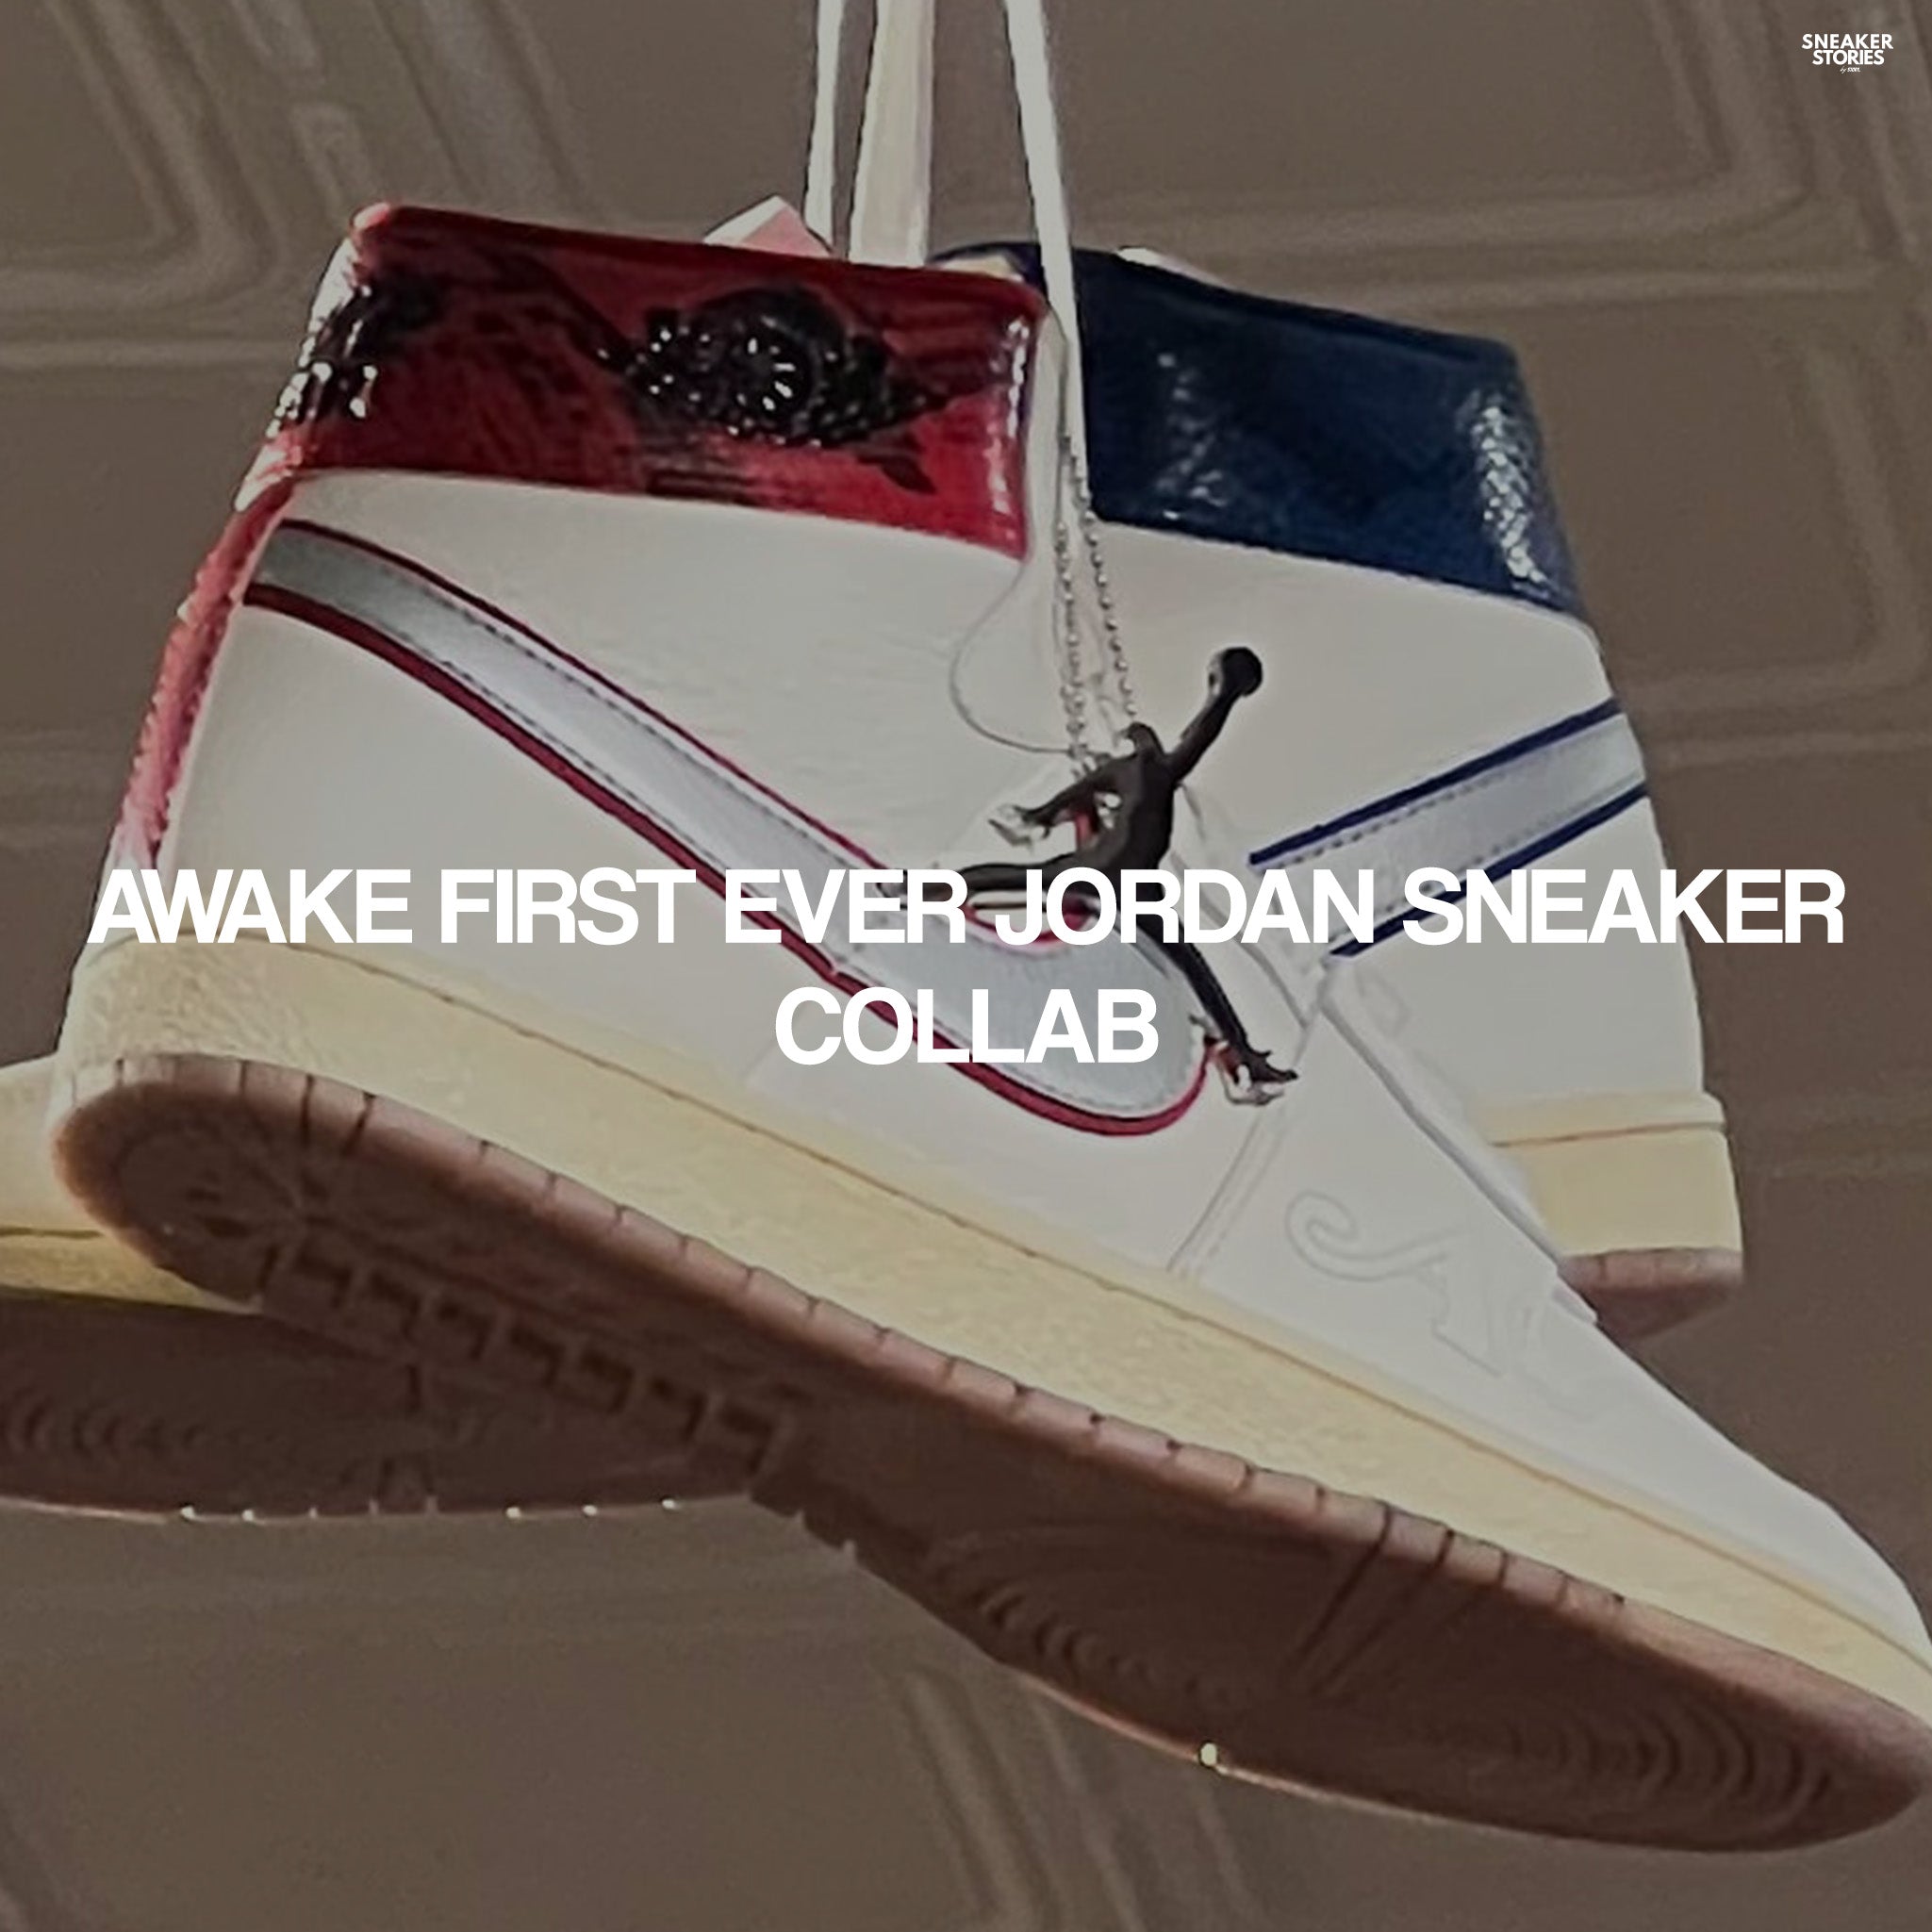 Awake first ever Jordan sneaker collab is around the corner